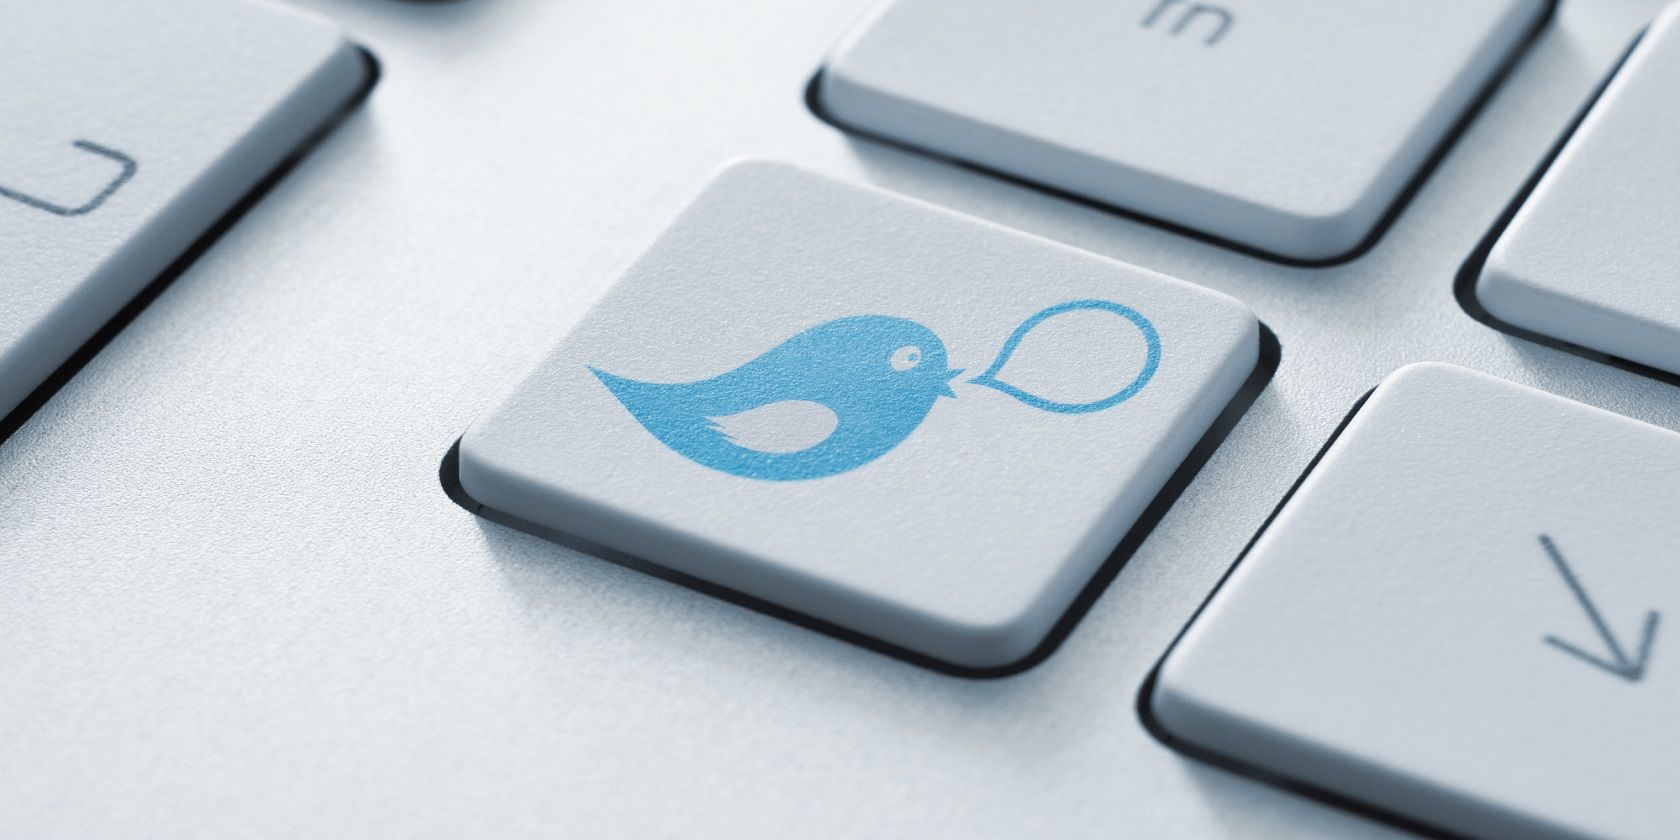 tweet key - Come scrivere tweet più lunghi: 7 metodi facili